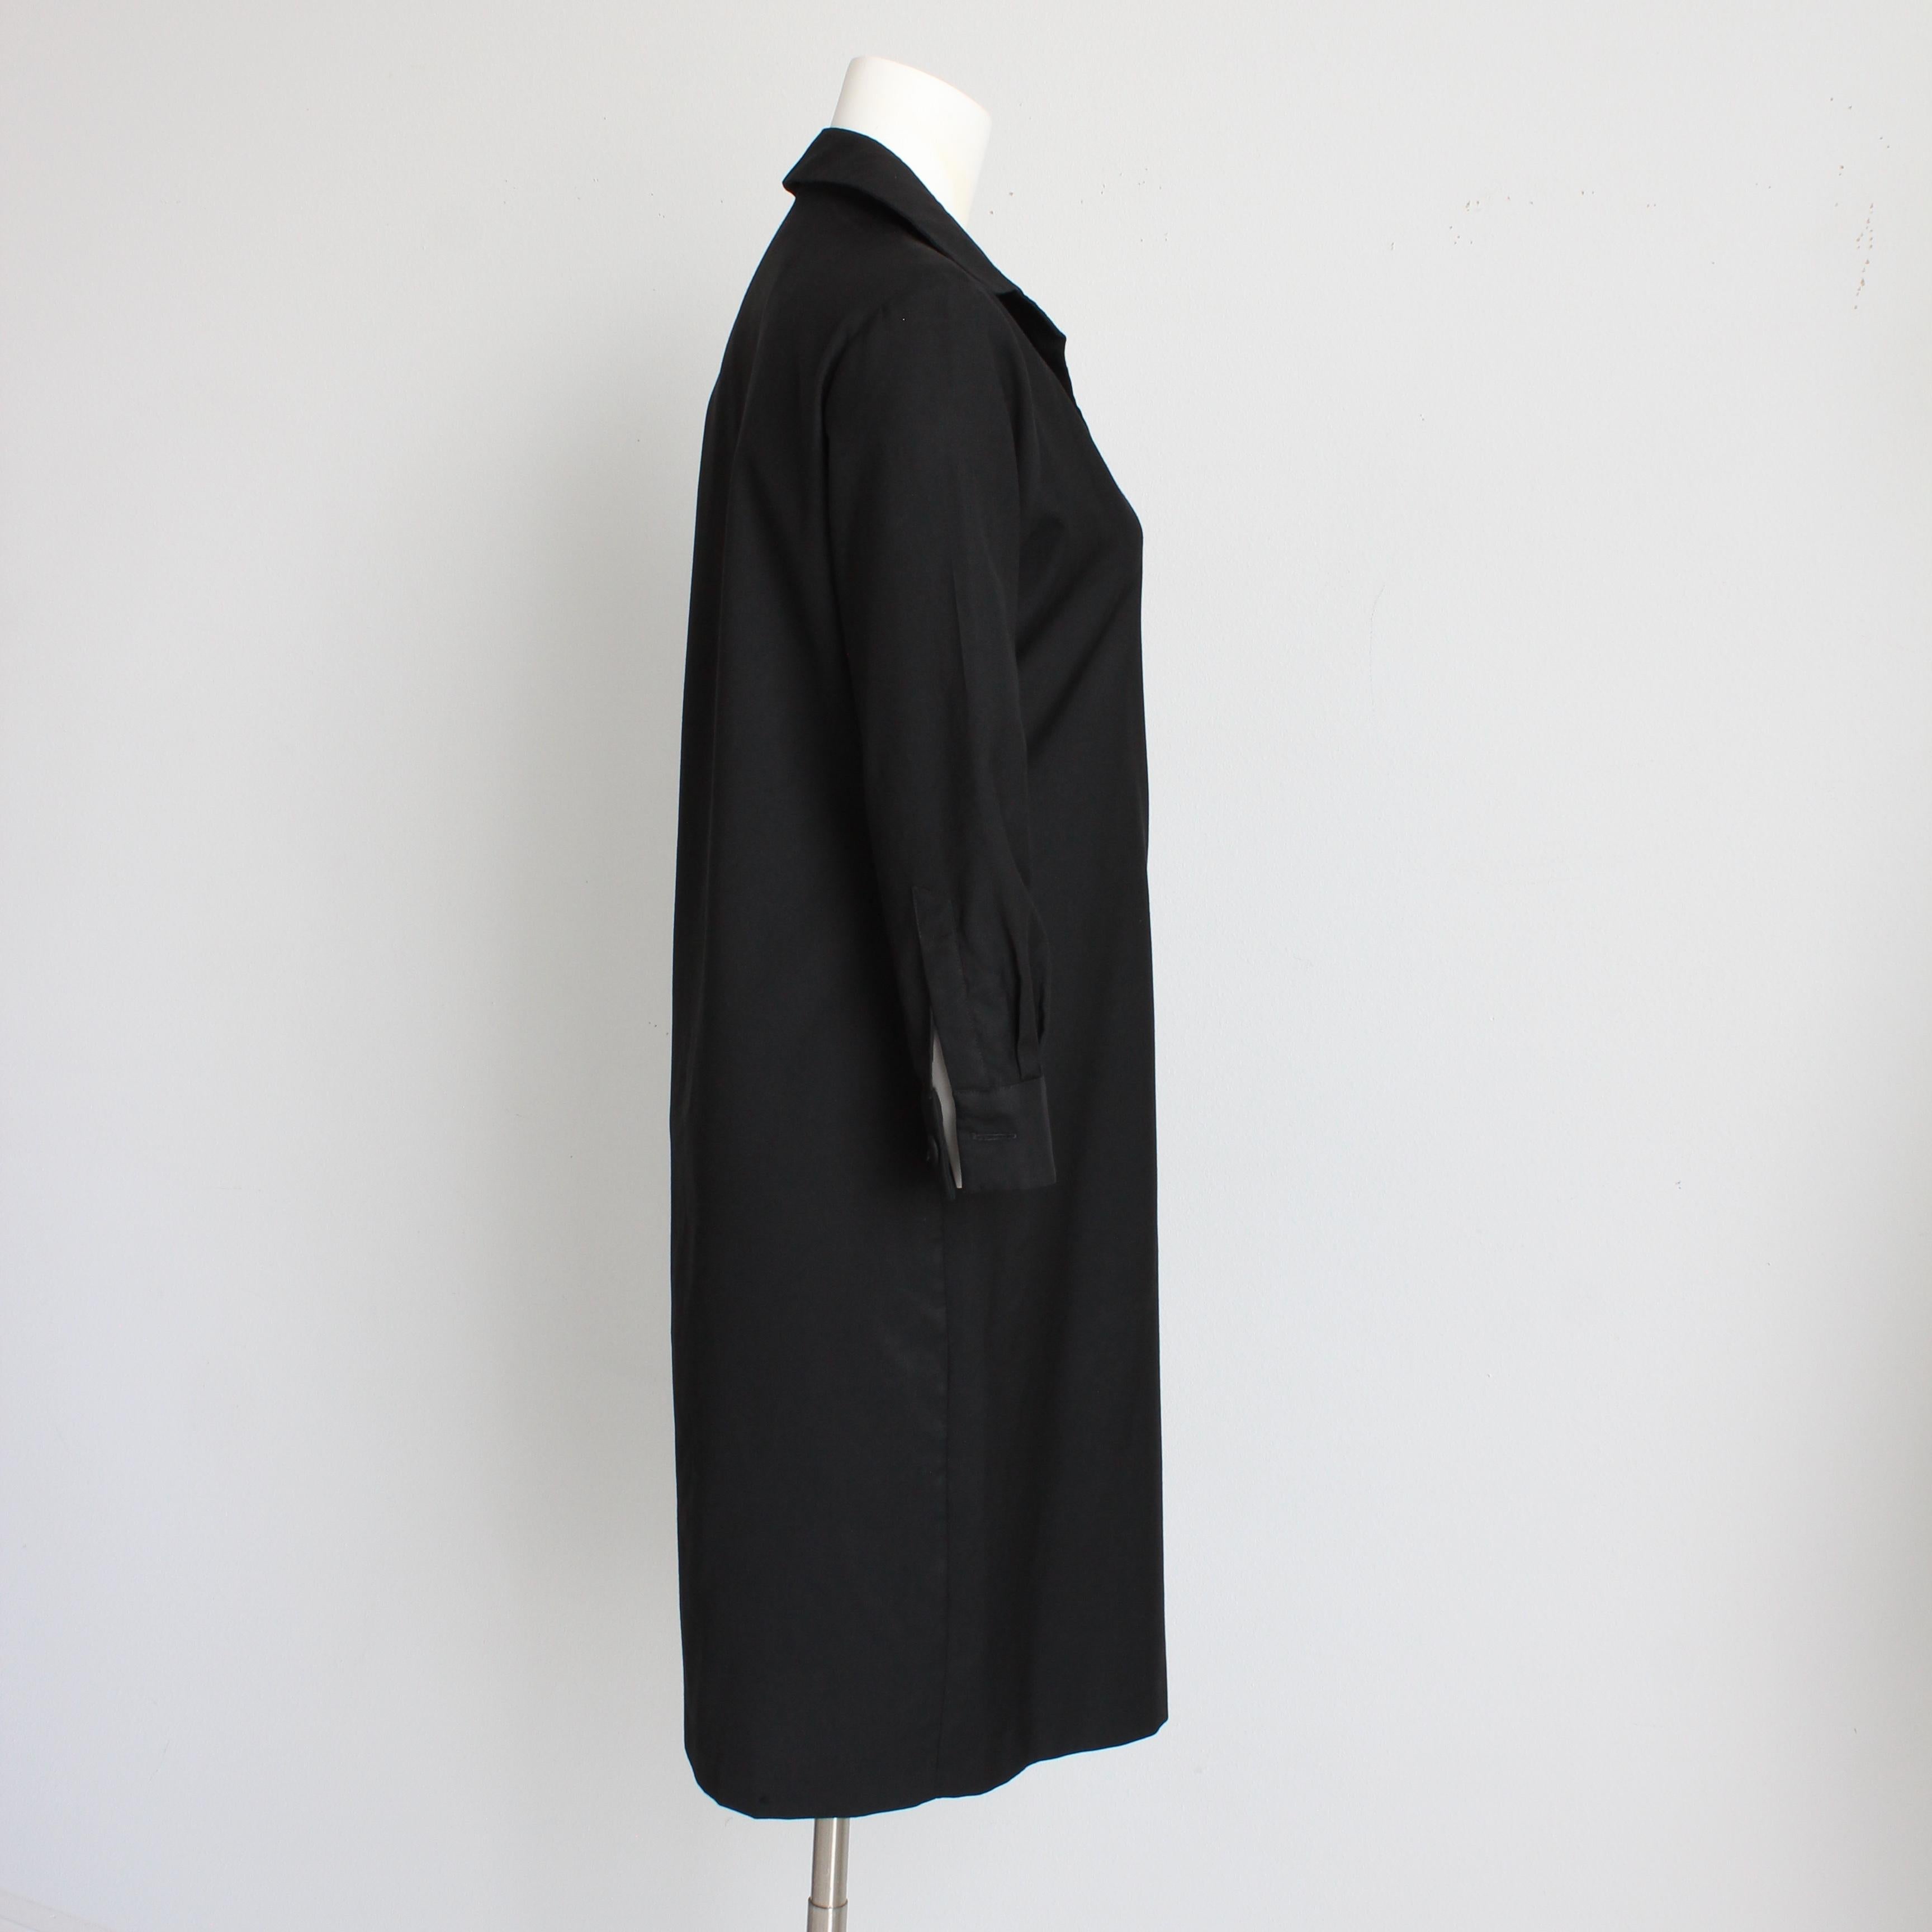 Bottega Veneta Dress Black Wool Twill Shirtwaist LBD Button Front Sz 42 Italy For Sale 3